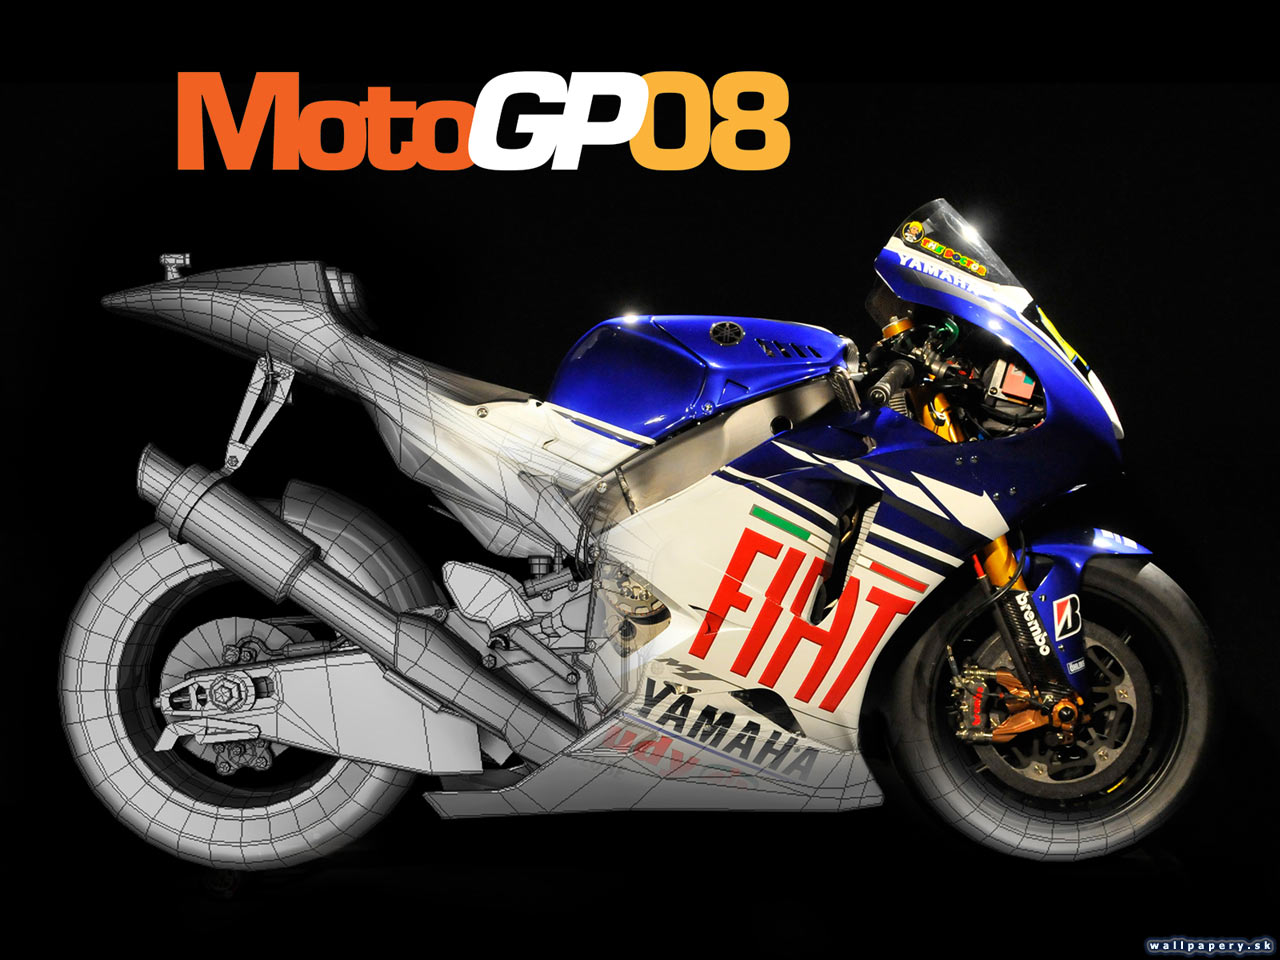 MotoGP 08 - wallpaper 13